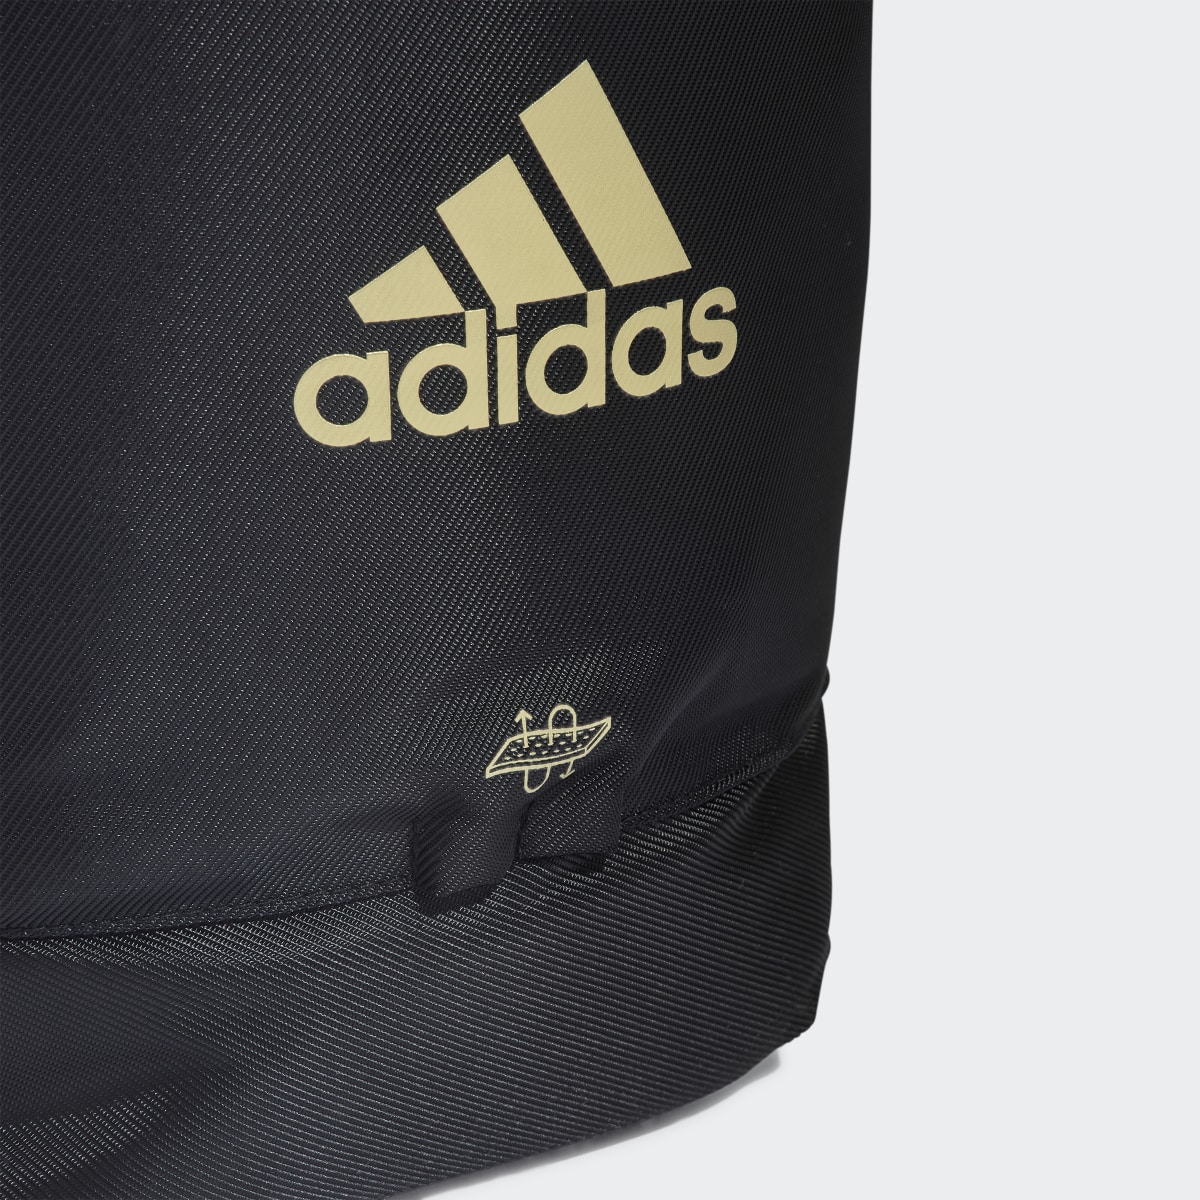 Adidas VS.6 Black/Gold Hockey Stick Bag. 6